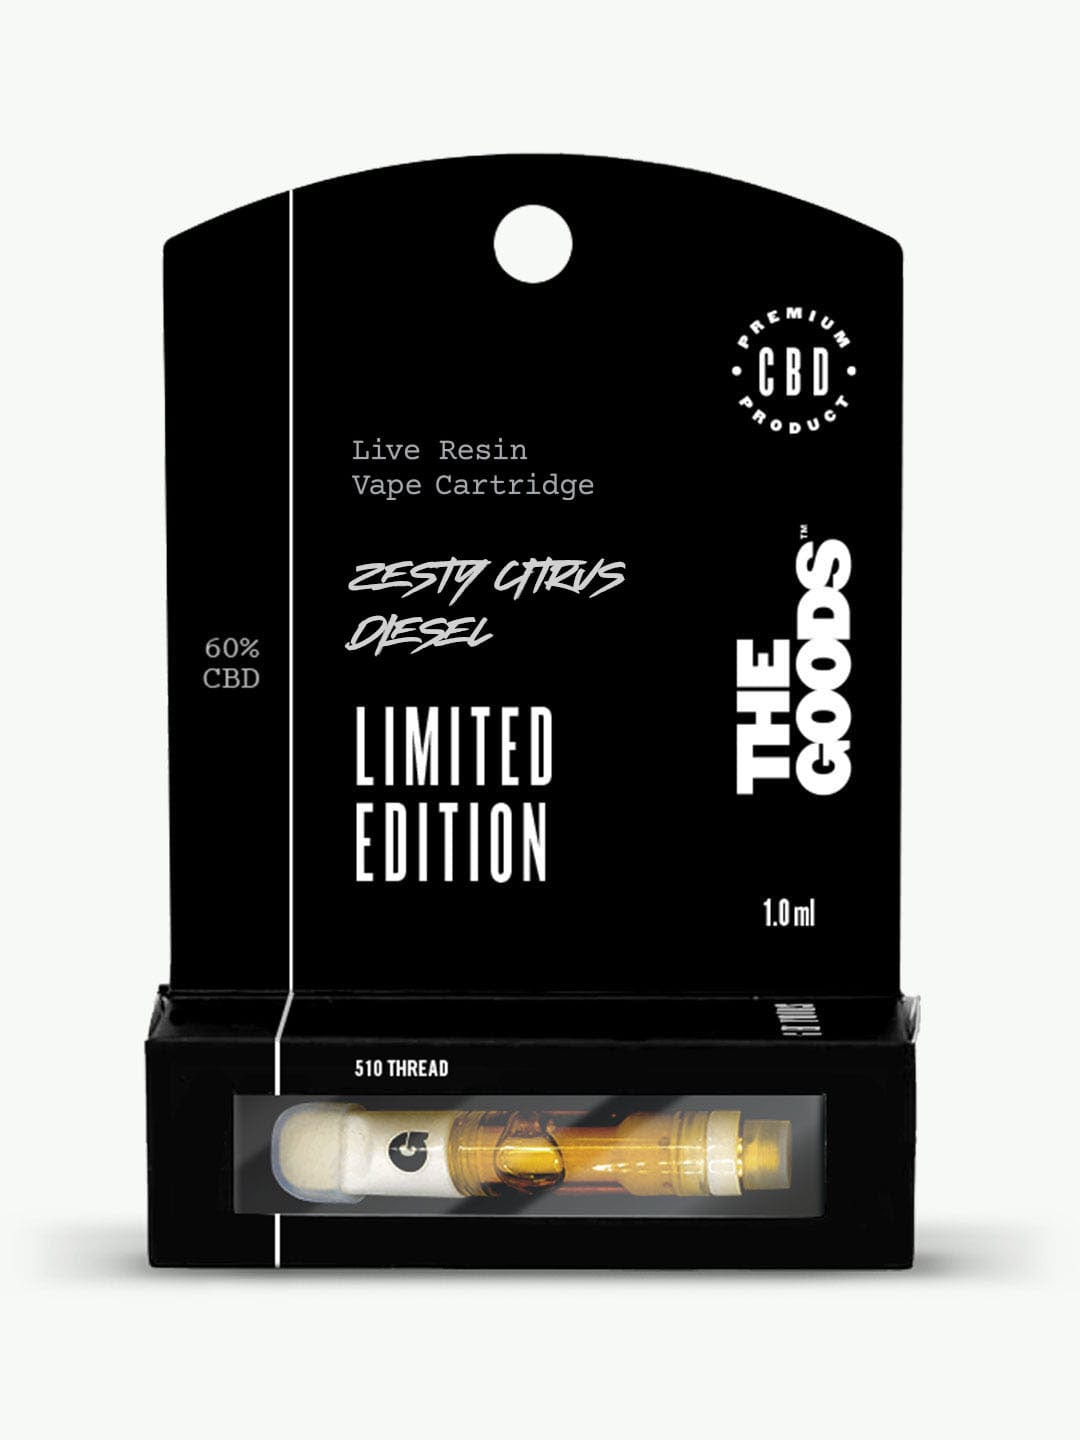 Zesty Citrus Diesel Live Resin 510 Cartridge 60% CBD 1.0ml